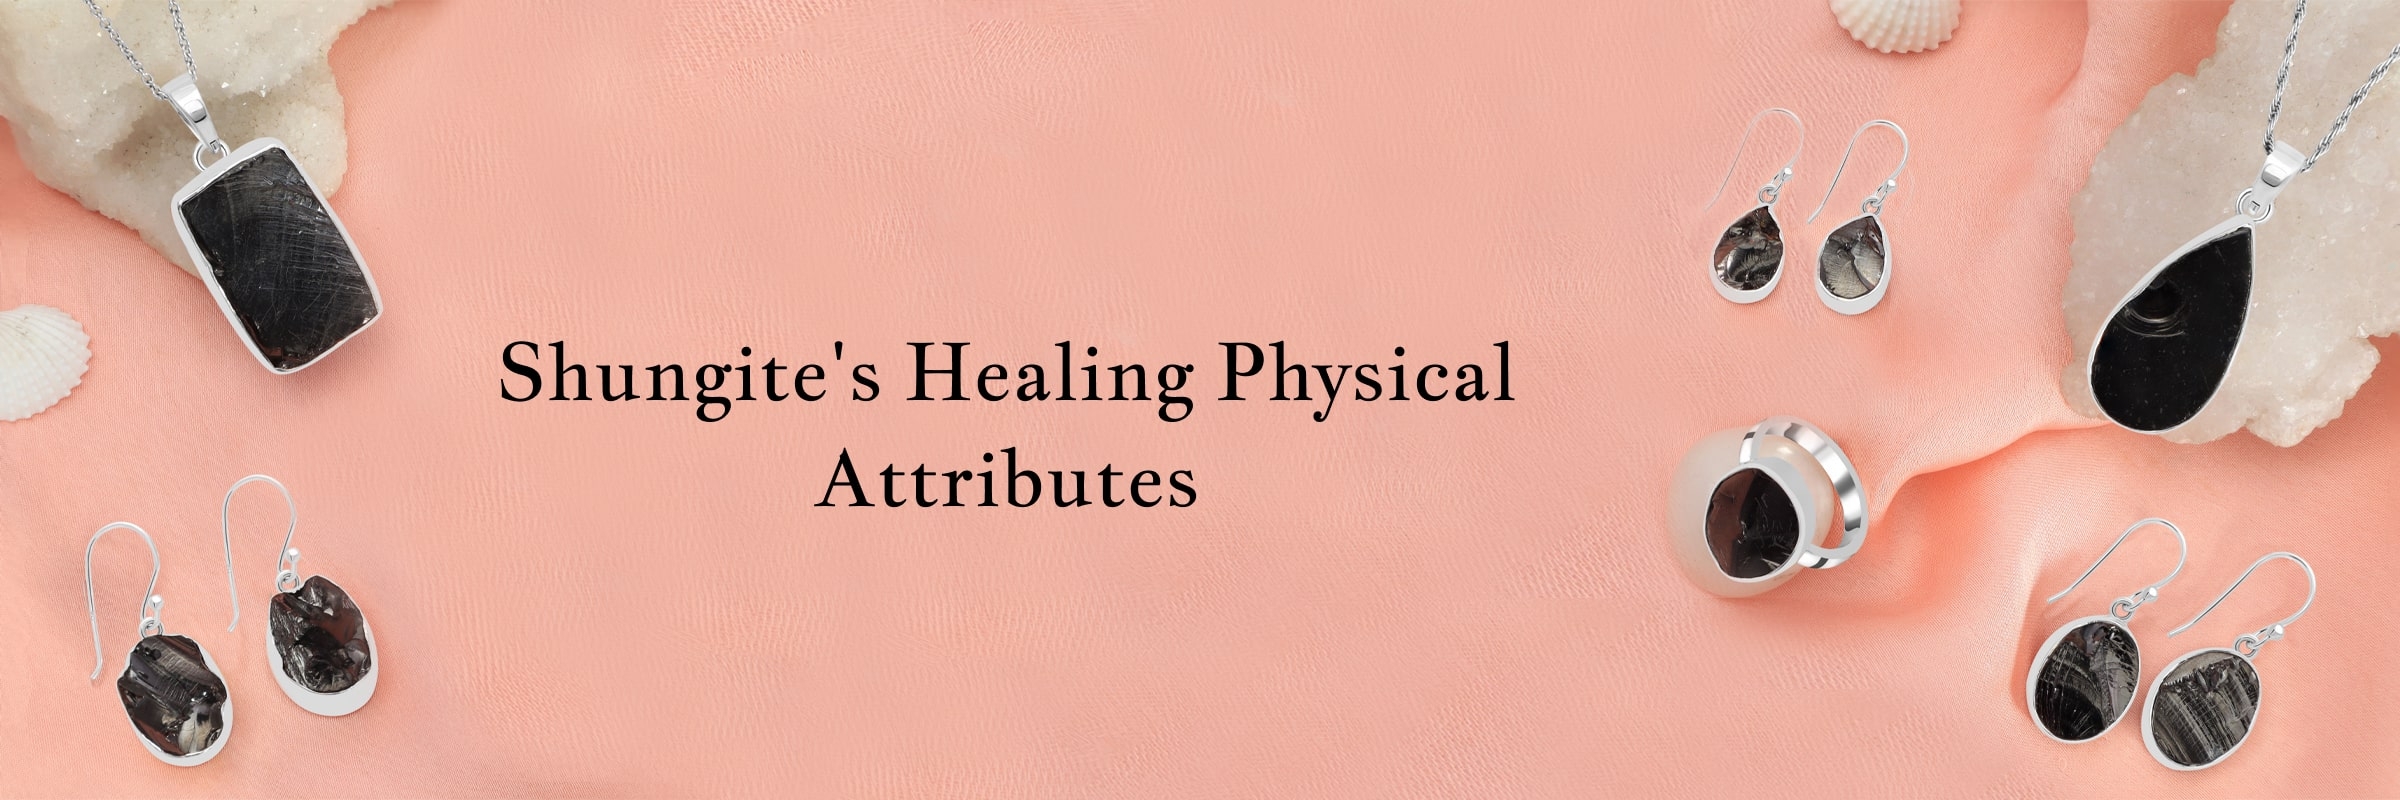 Physical Healing properties